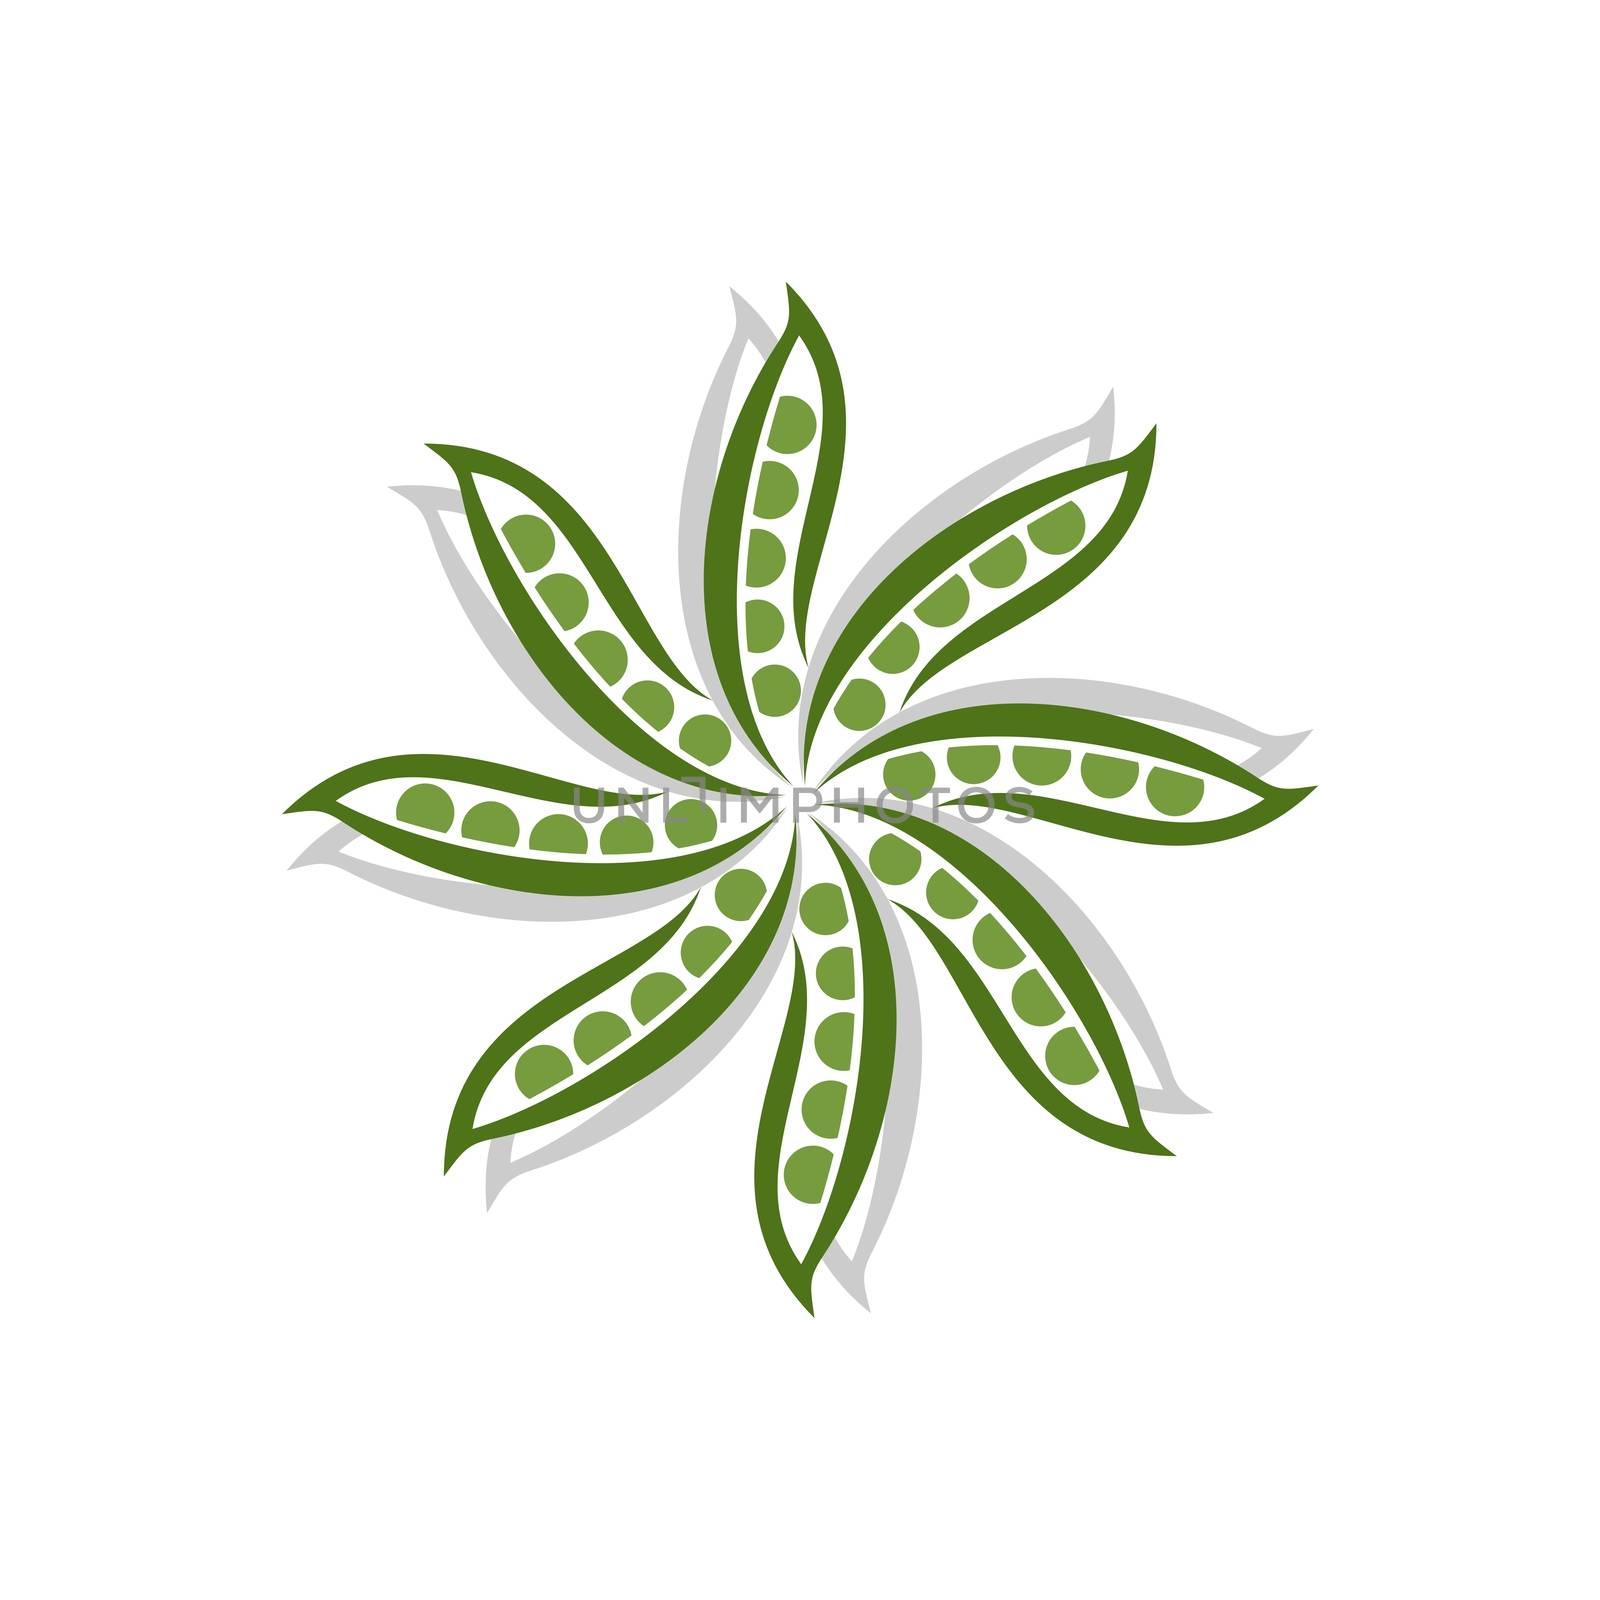 Green Pea Pod Star Logo Template Illustration Design. Vector EPS 10.